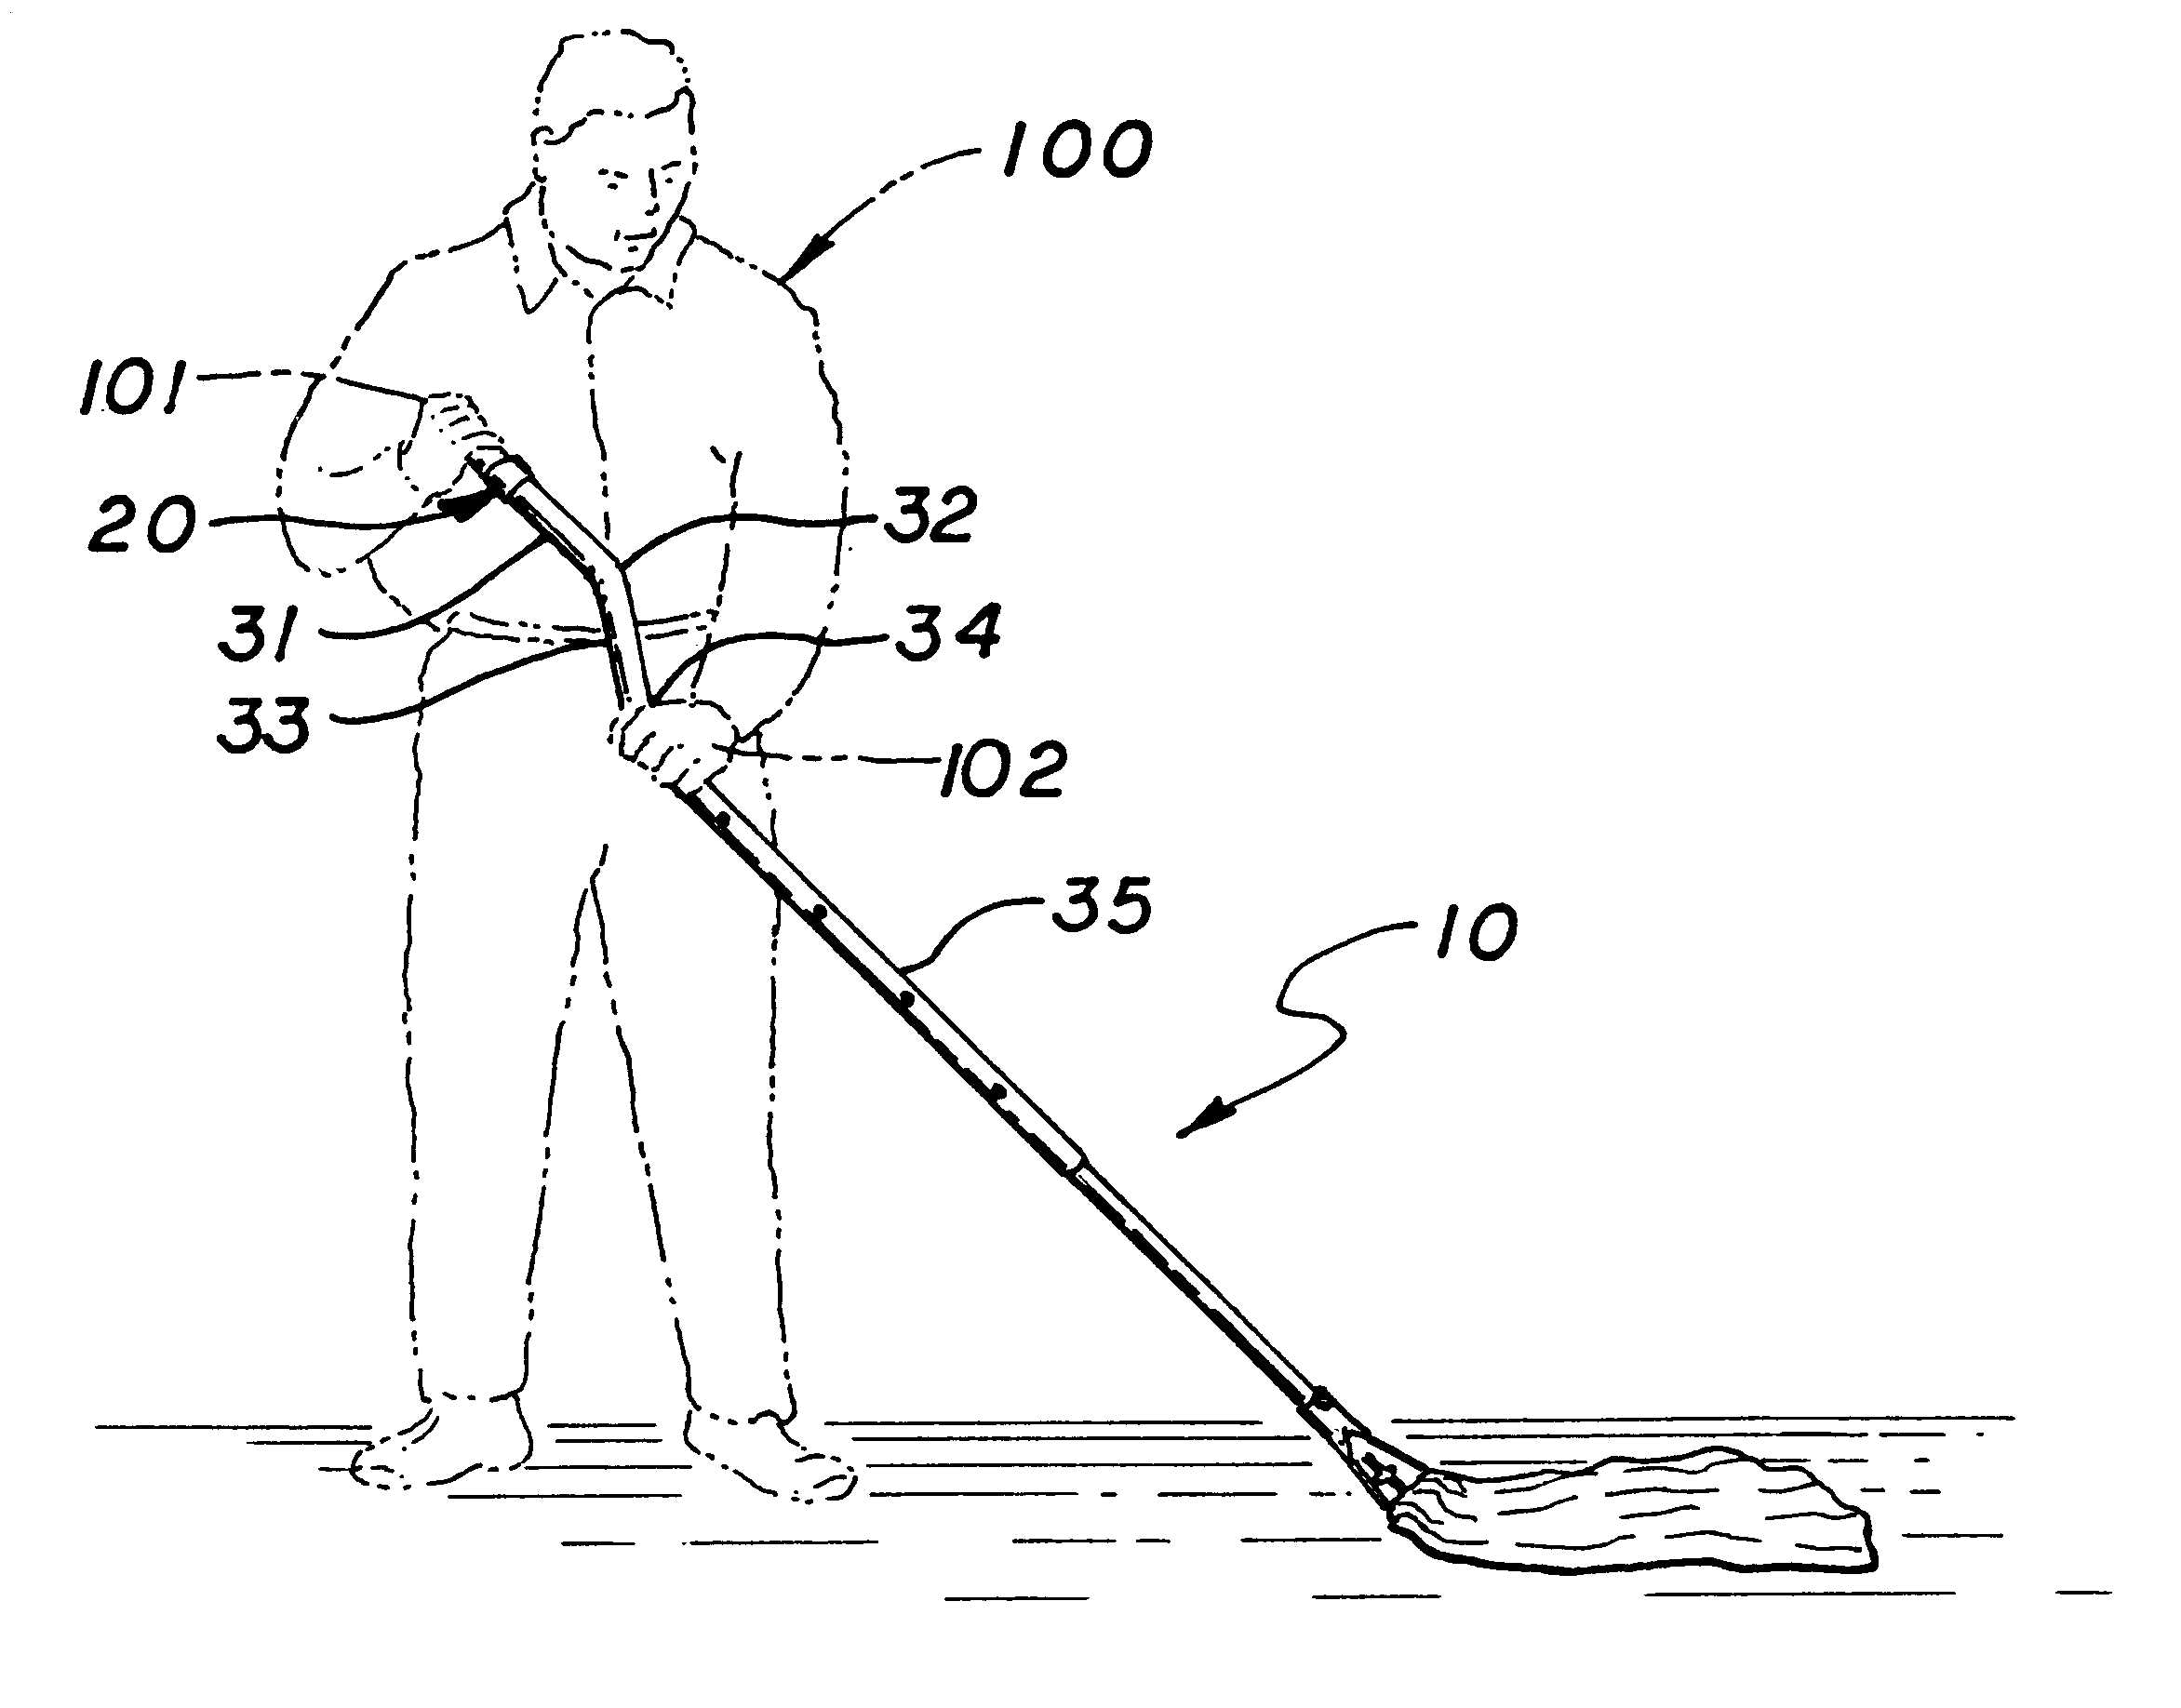 Ergonomic mop method